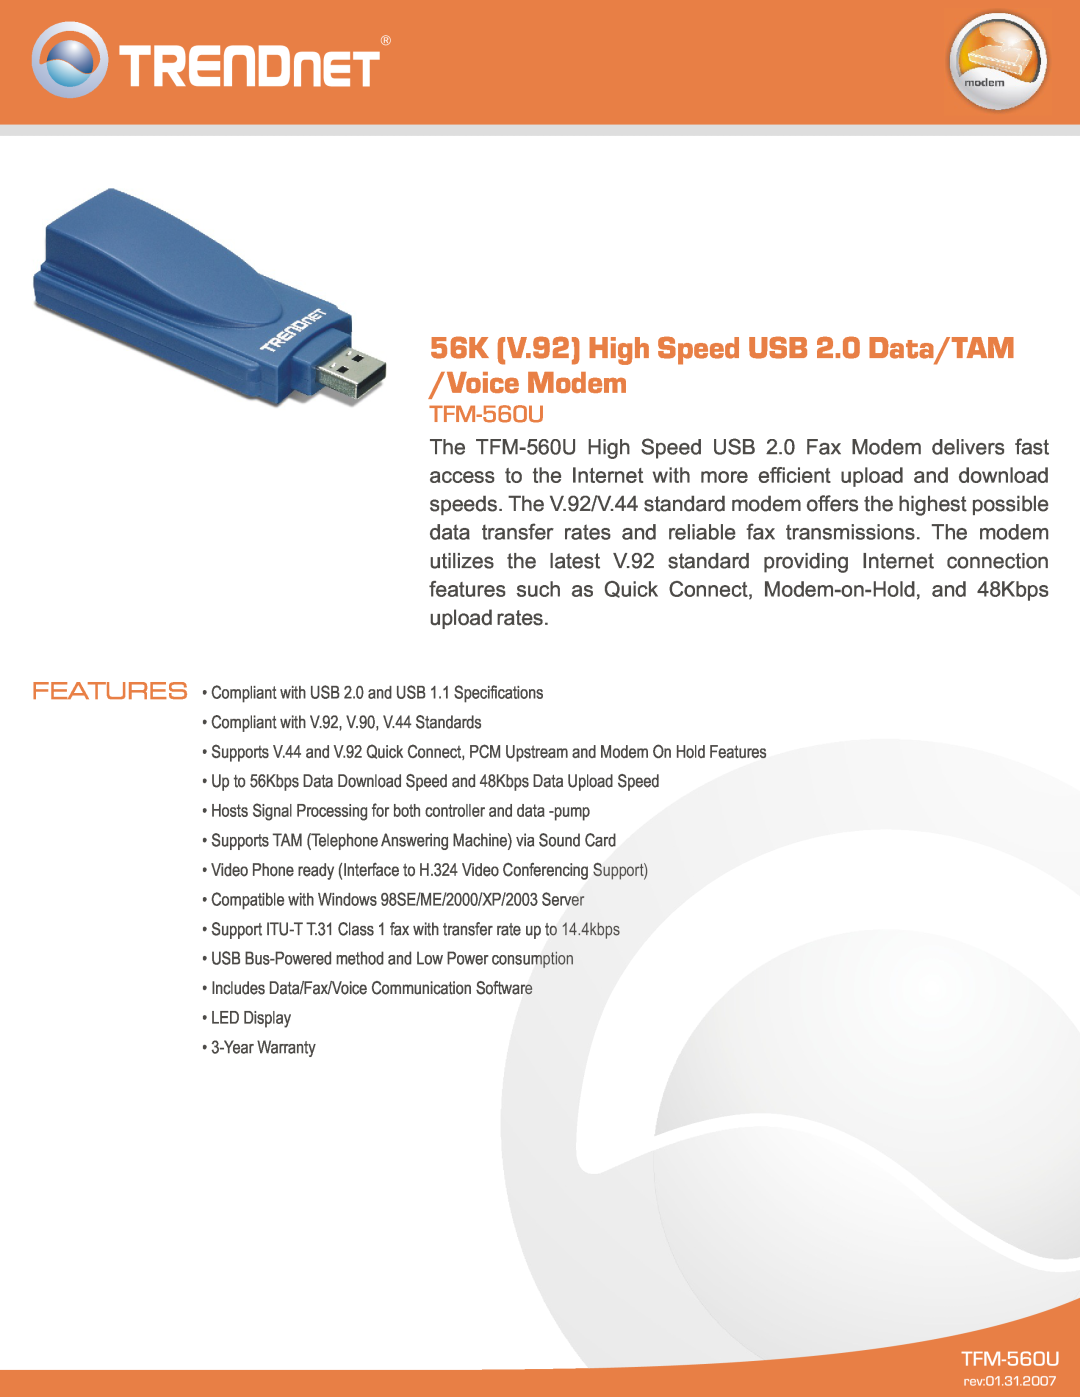 TRENDnet High Spped USB 2.0 Data/TAM/Voice Modem specifications 56K V.92 High Speed USB 2.0 Data/TAM Voice Modem, TFM-560U 